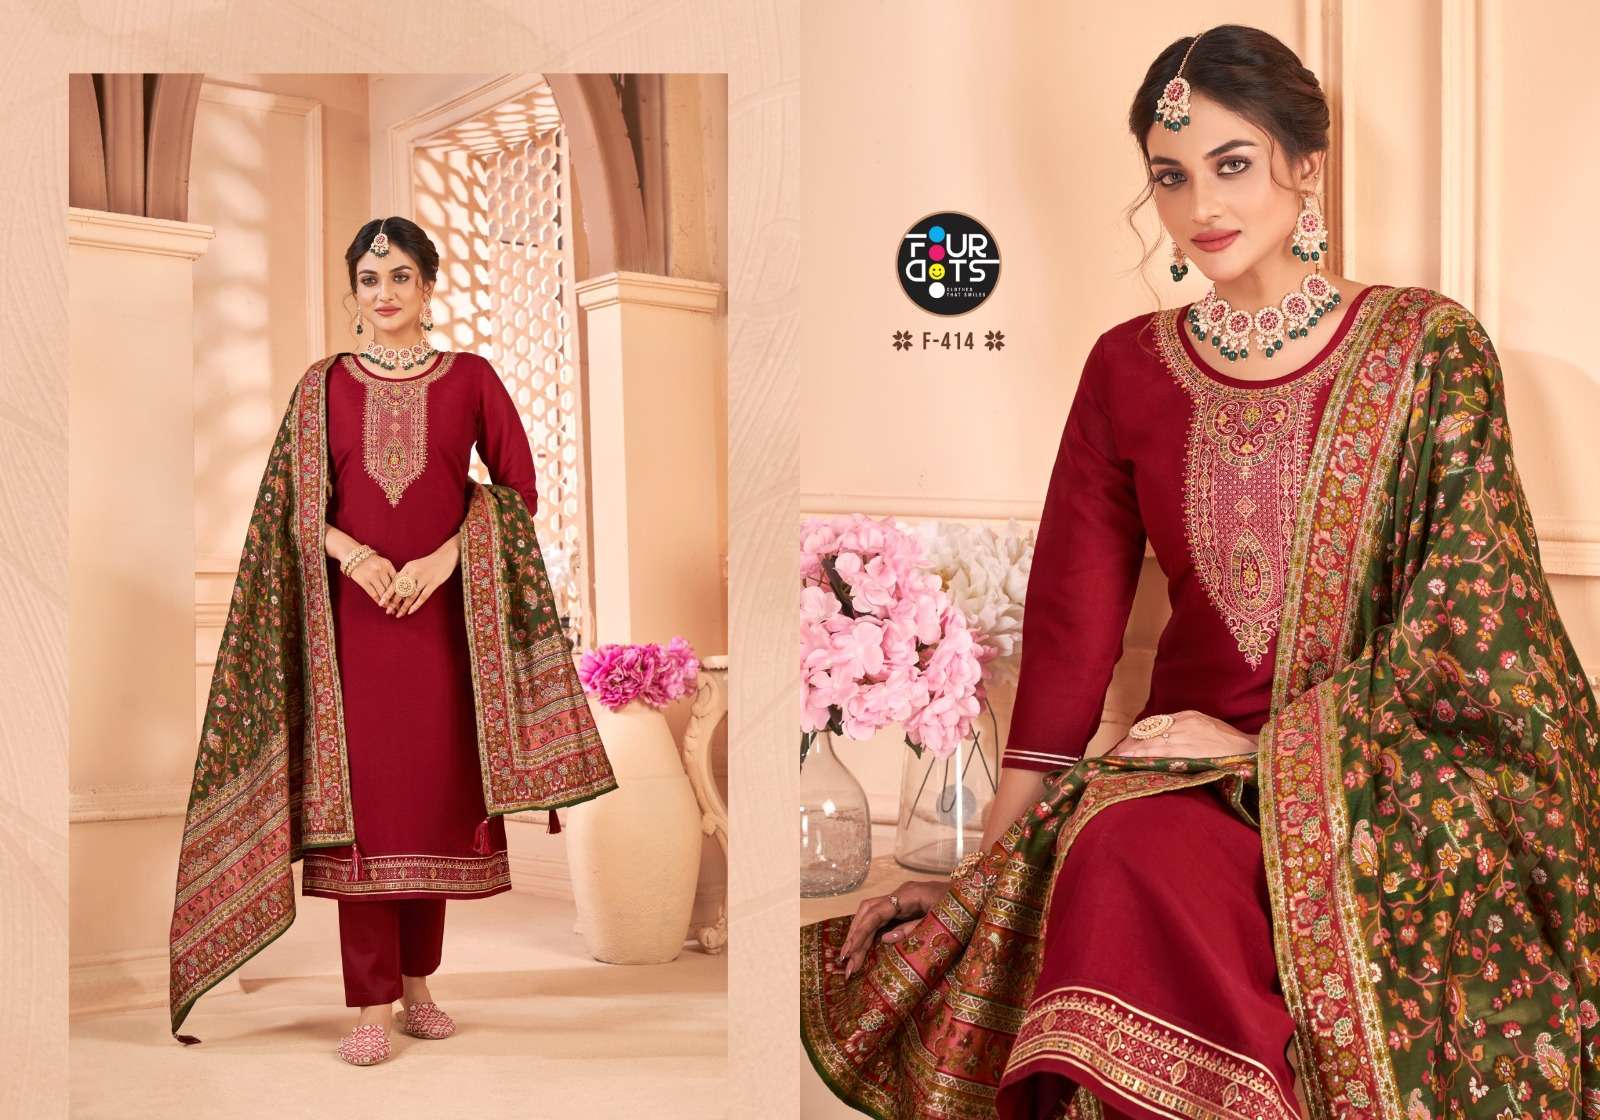 fourdots loren 411-414 series simar silk designer salwar suits collection at wholesale price